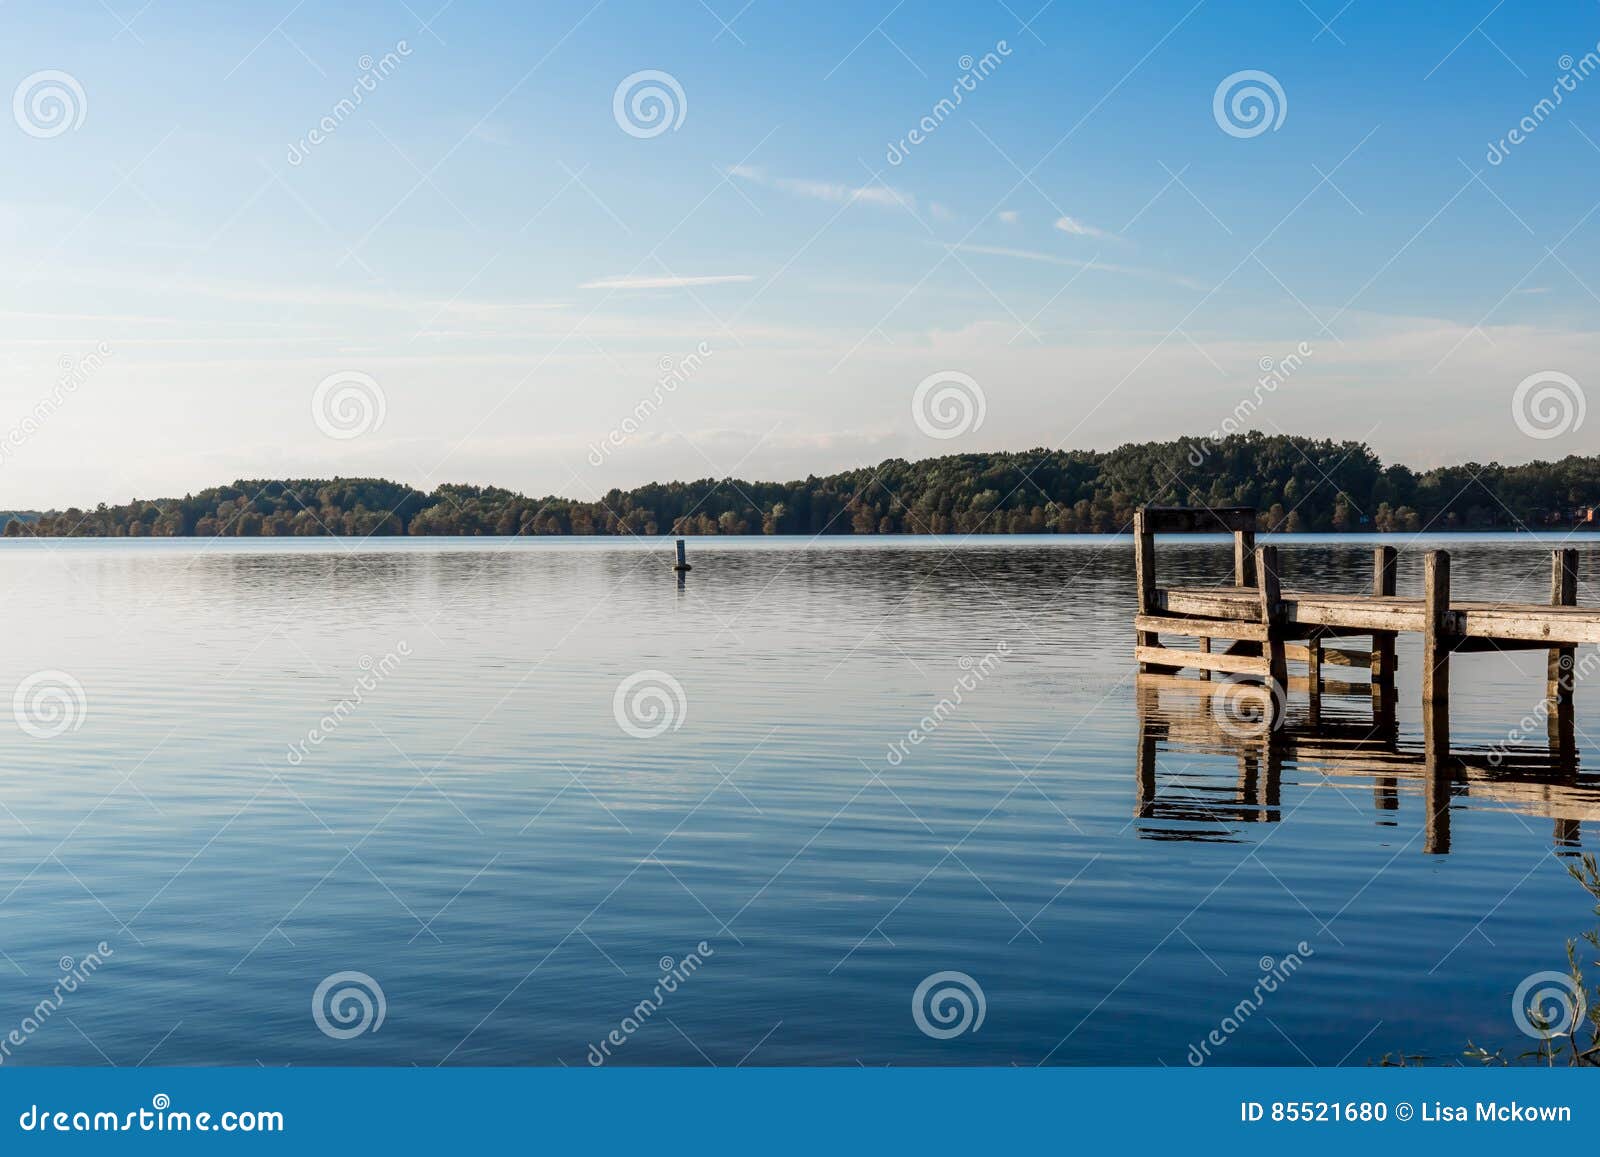 a peaceful day at a missouri lake